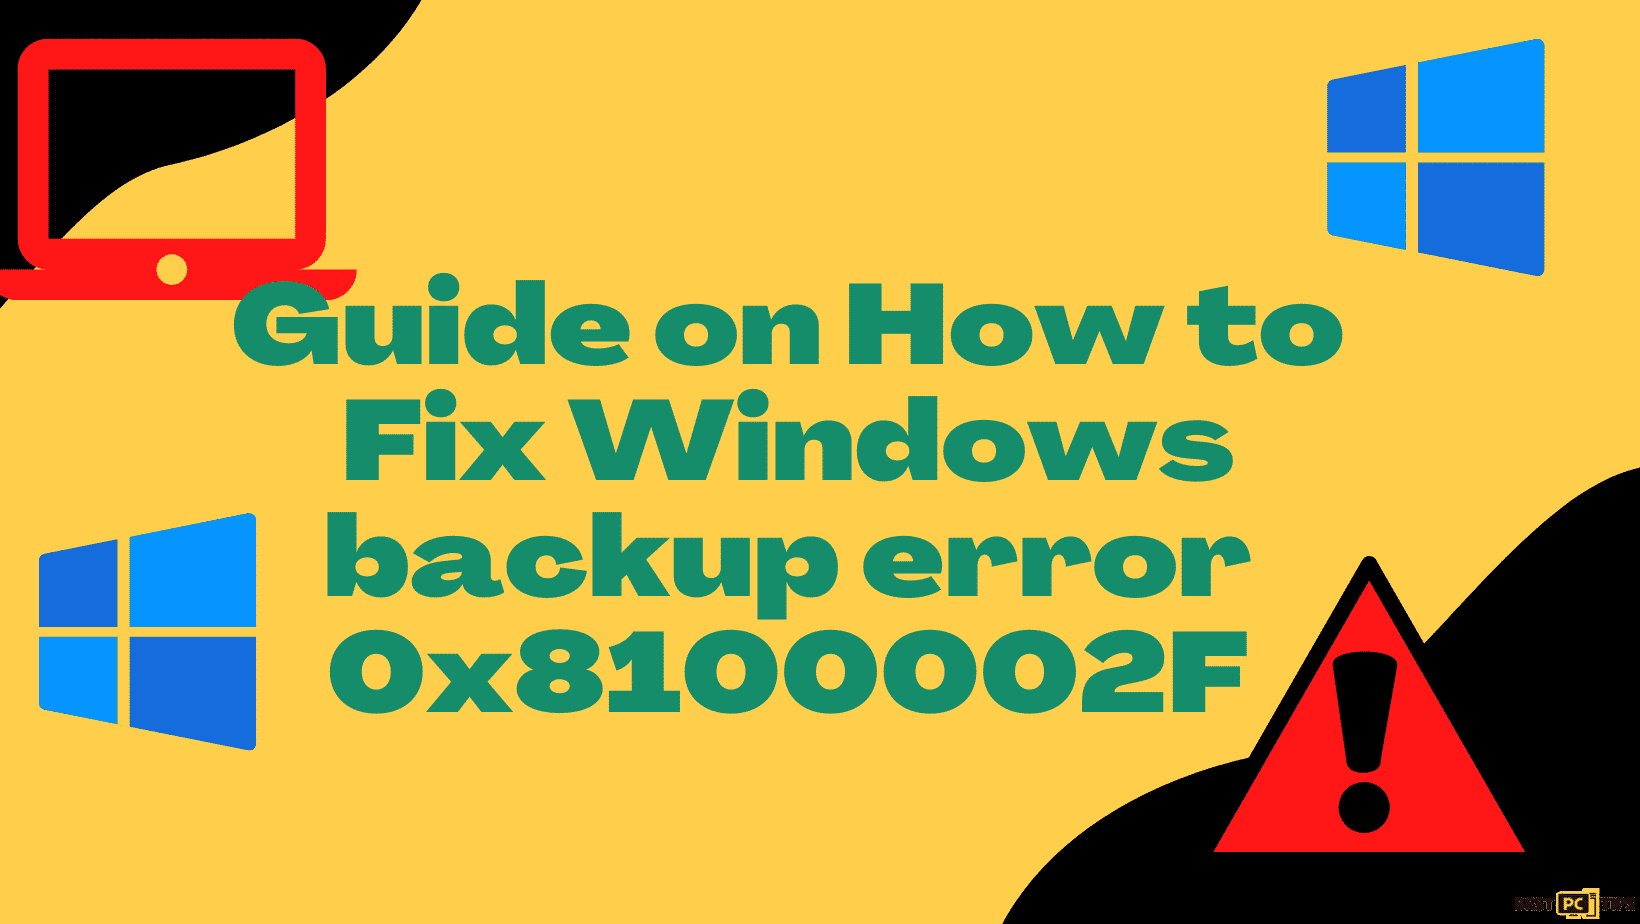 windows-error 0x8100002F